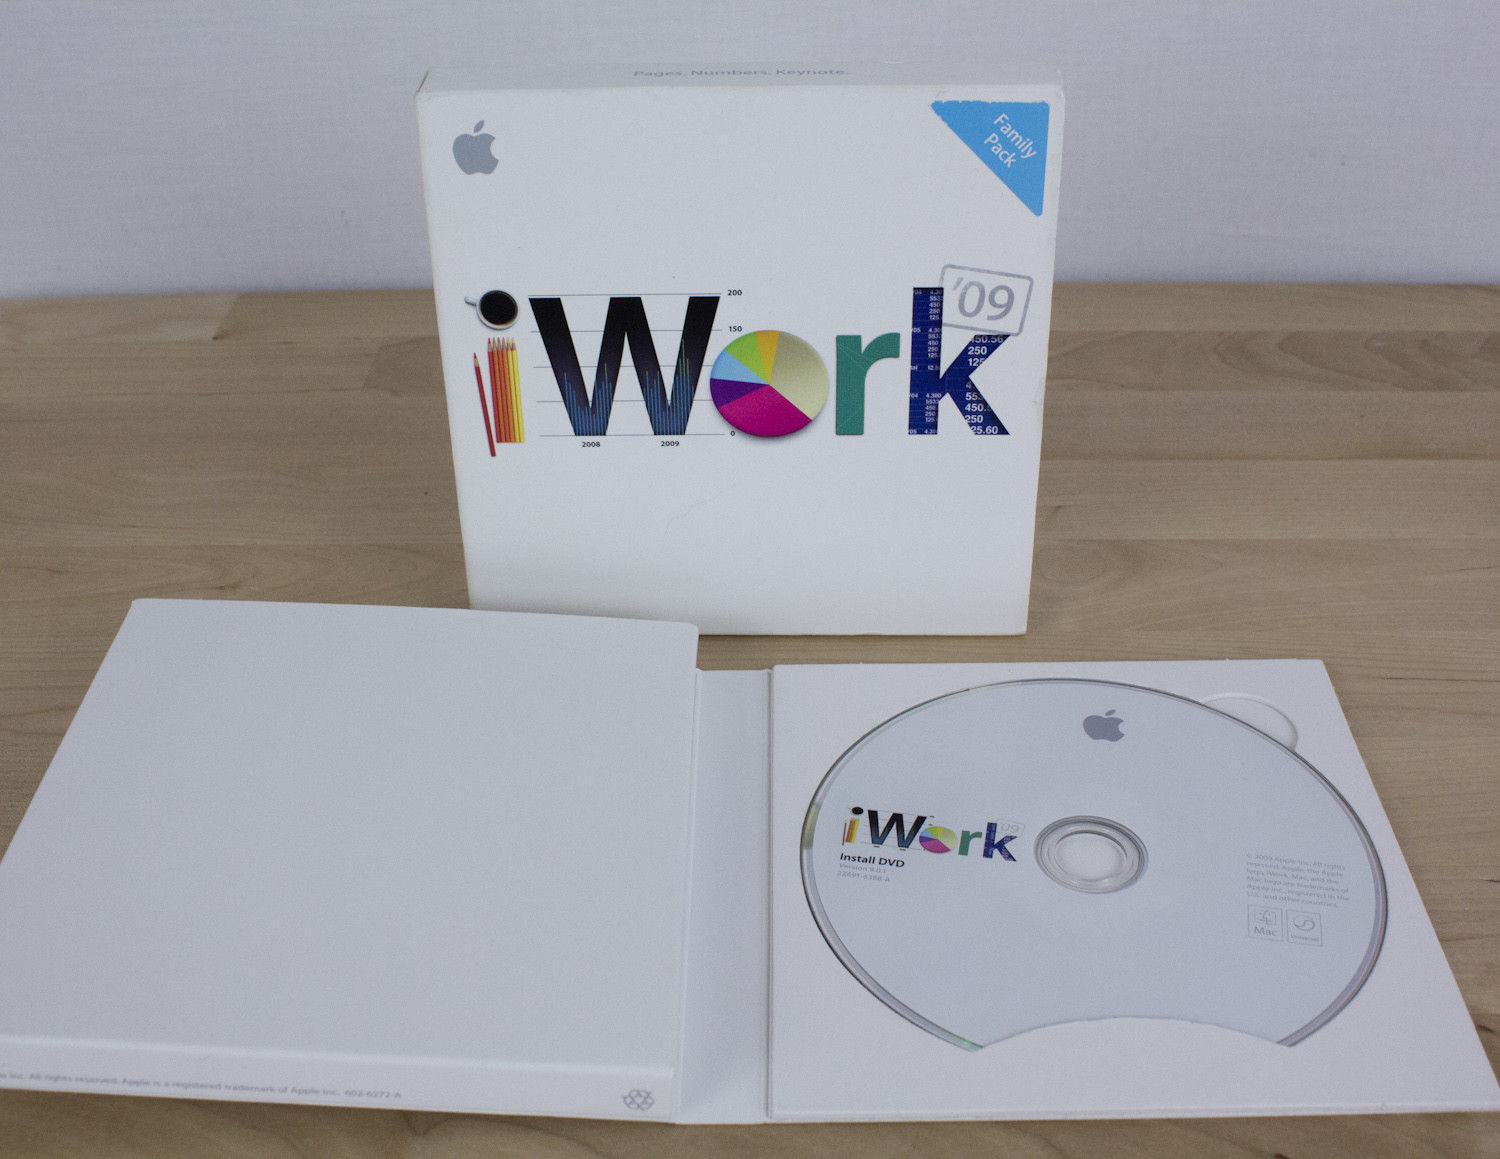 iwork 09 download full